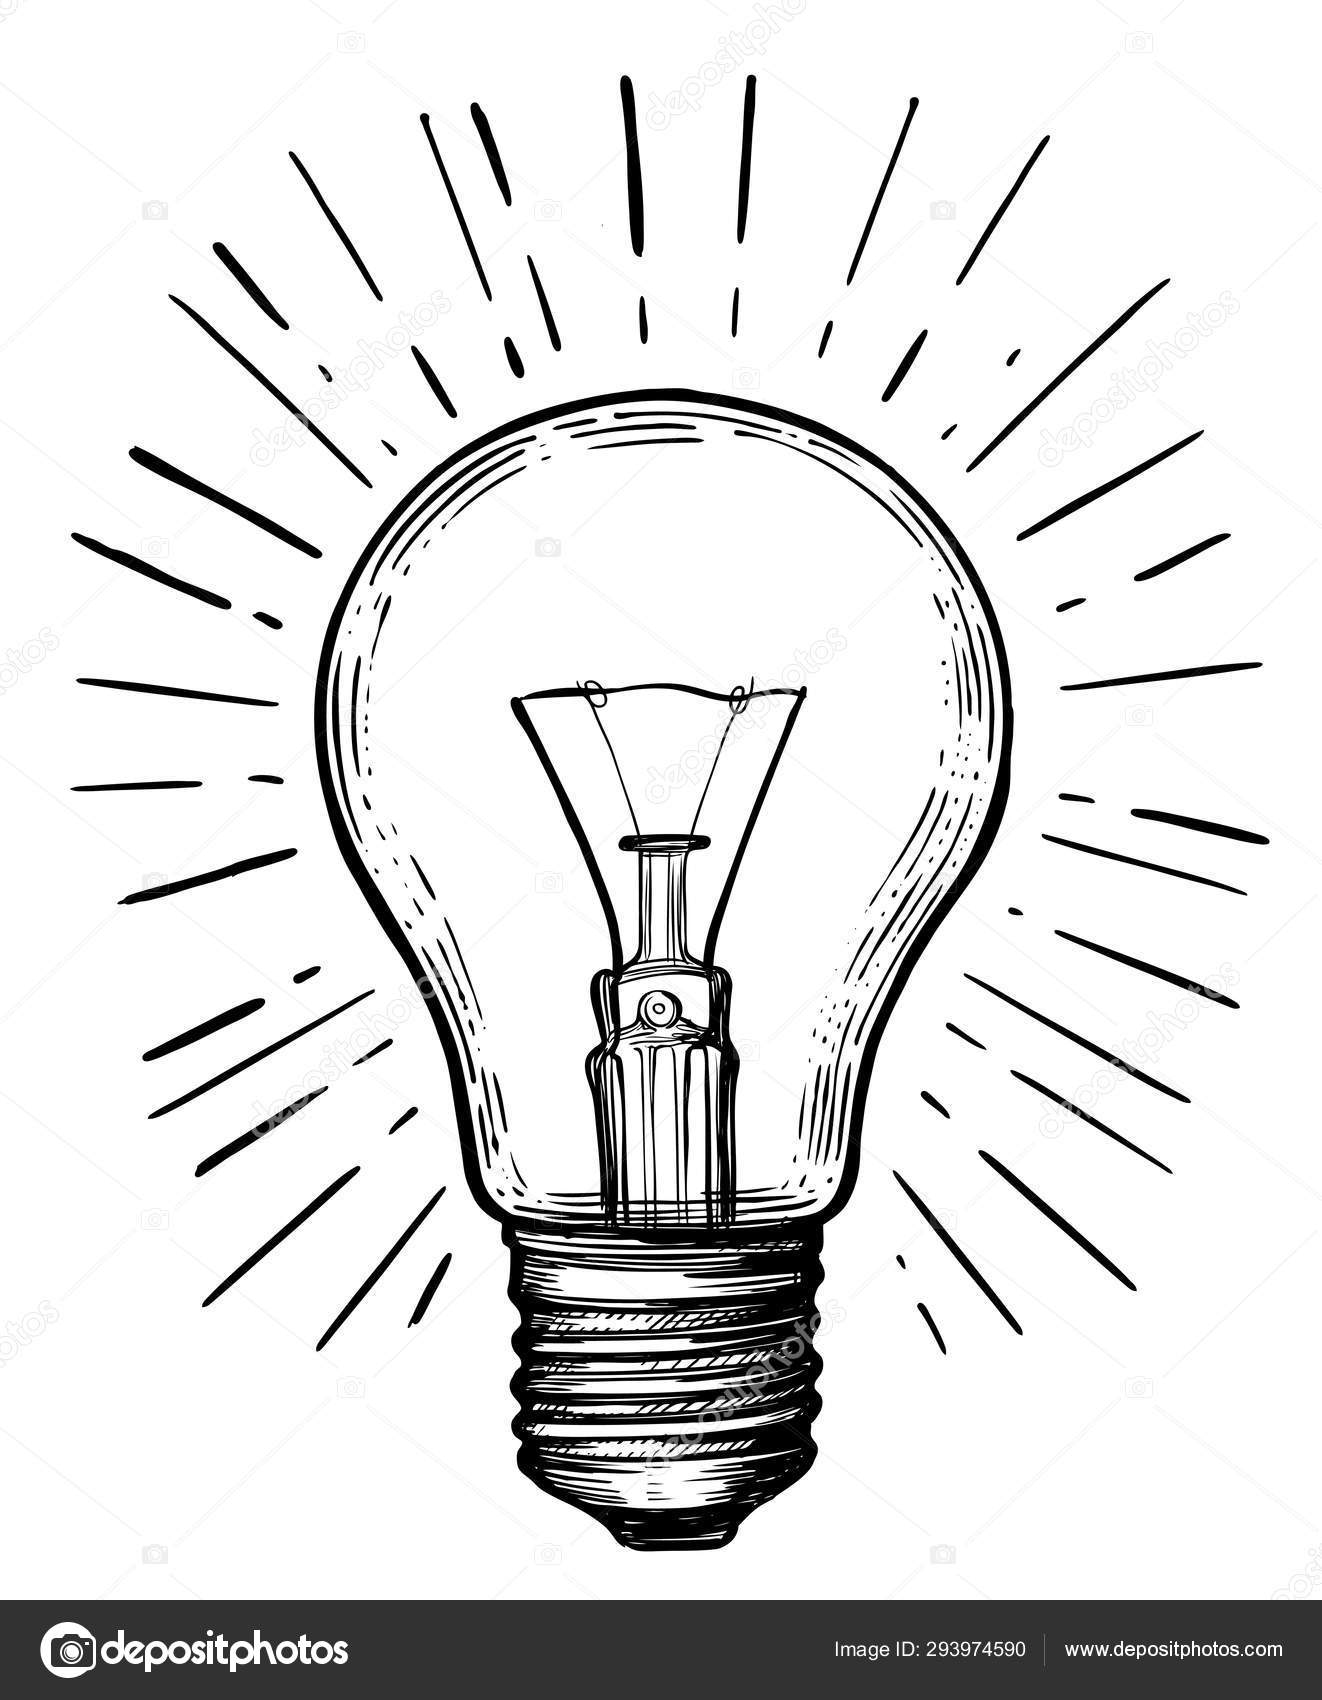 Vintage light bulb sketch style. Stock Illustration by ©bioraven #293974590